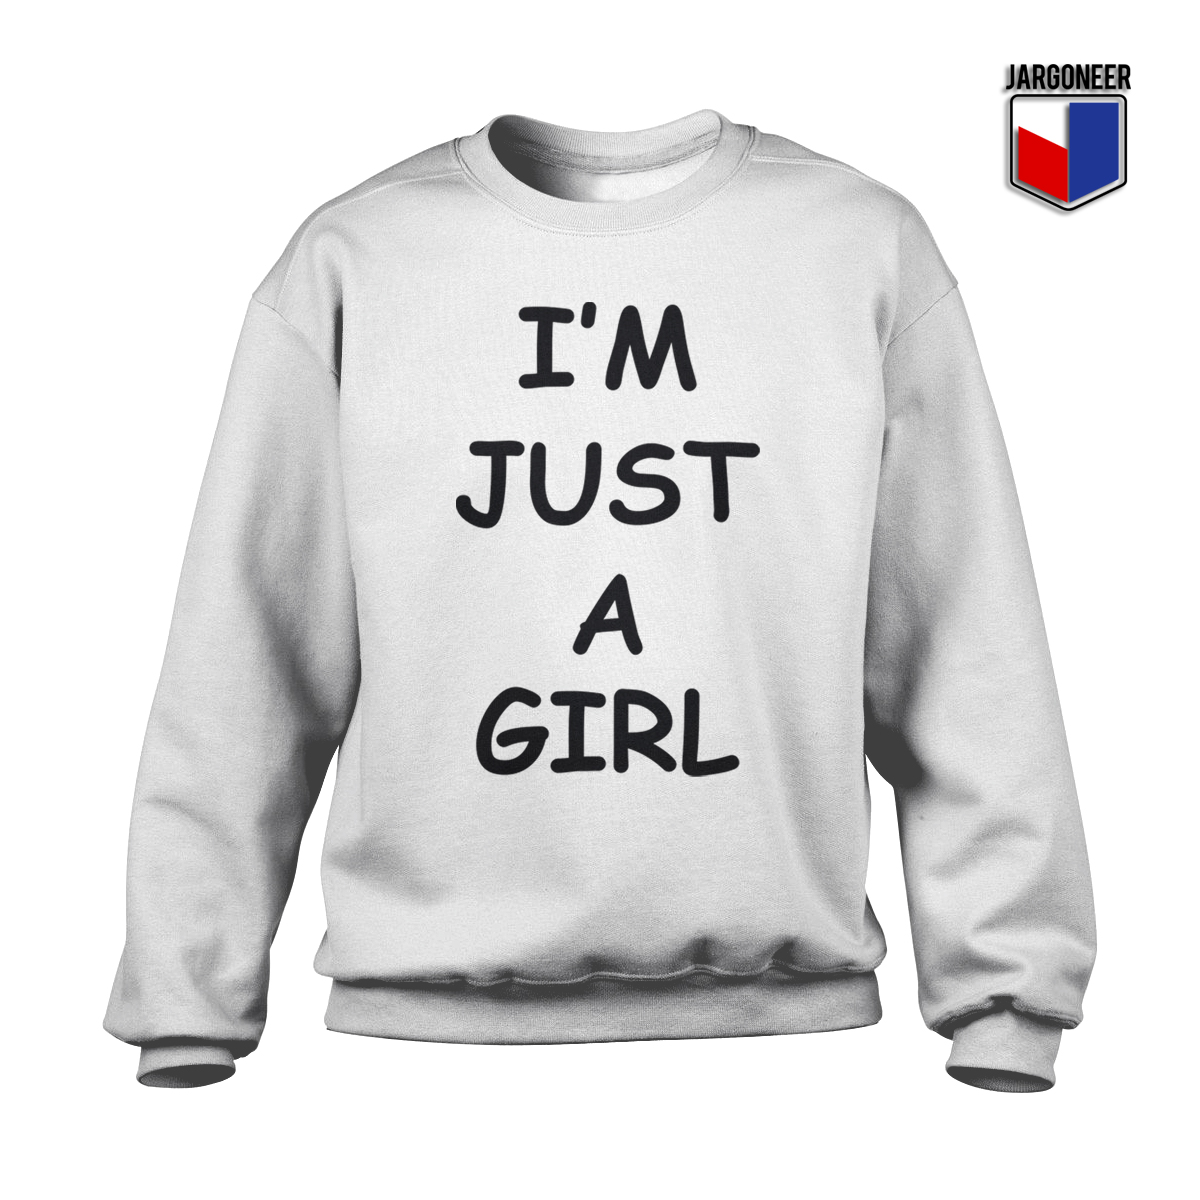 IM JUST A Girl White Sweatshirt - Shop Unique Graphic Cool Shirt Designs